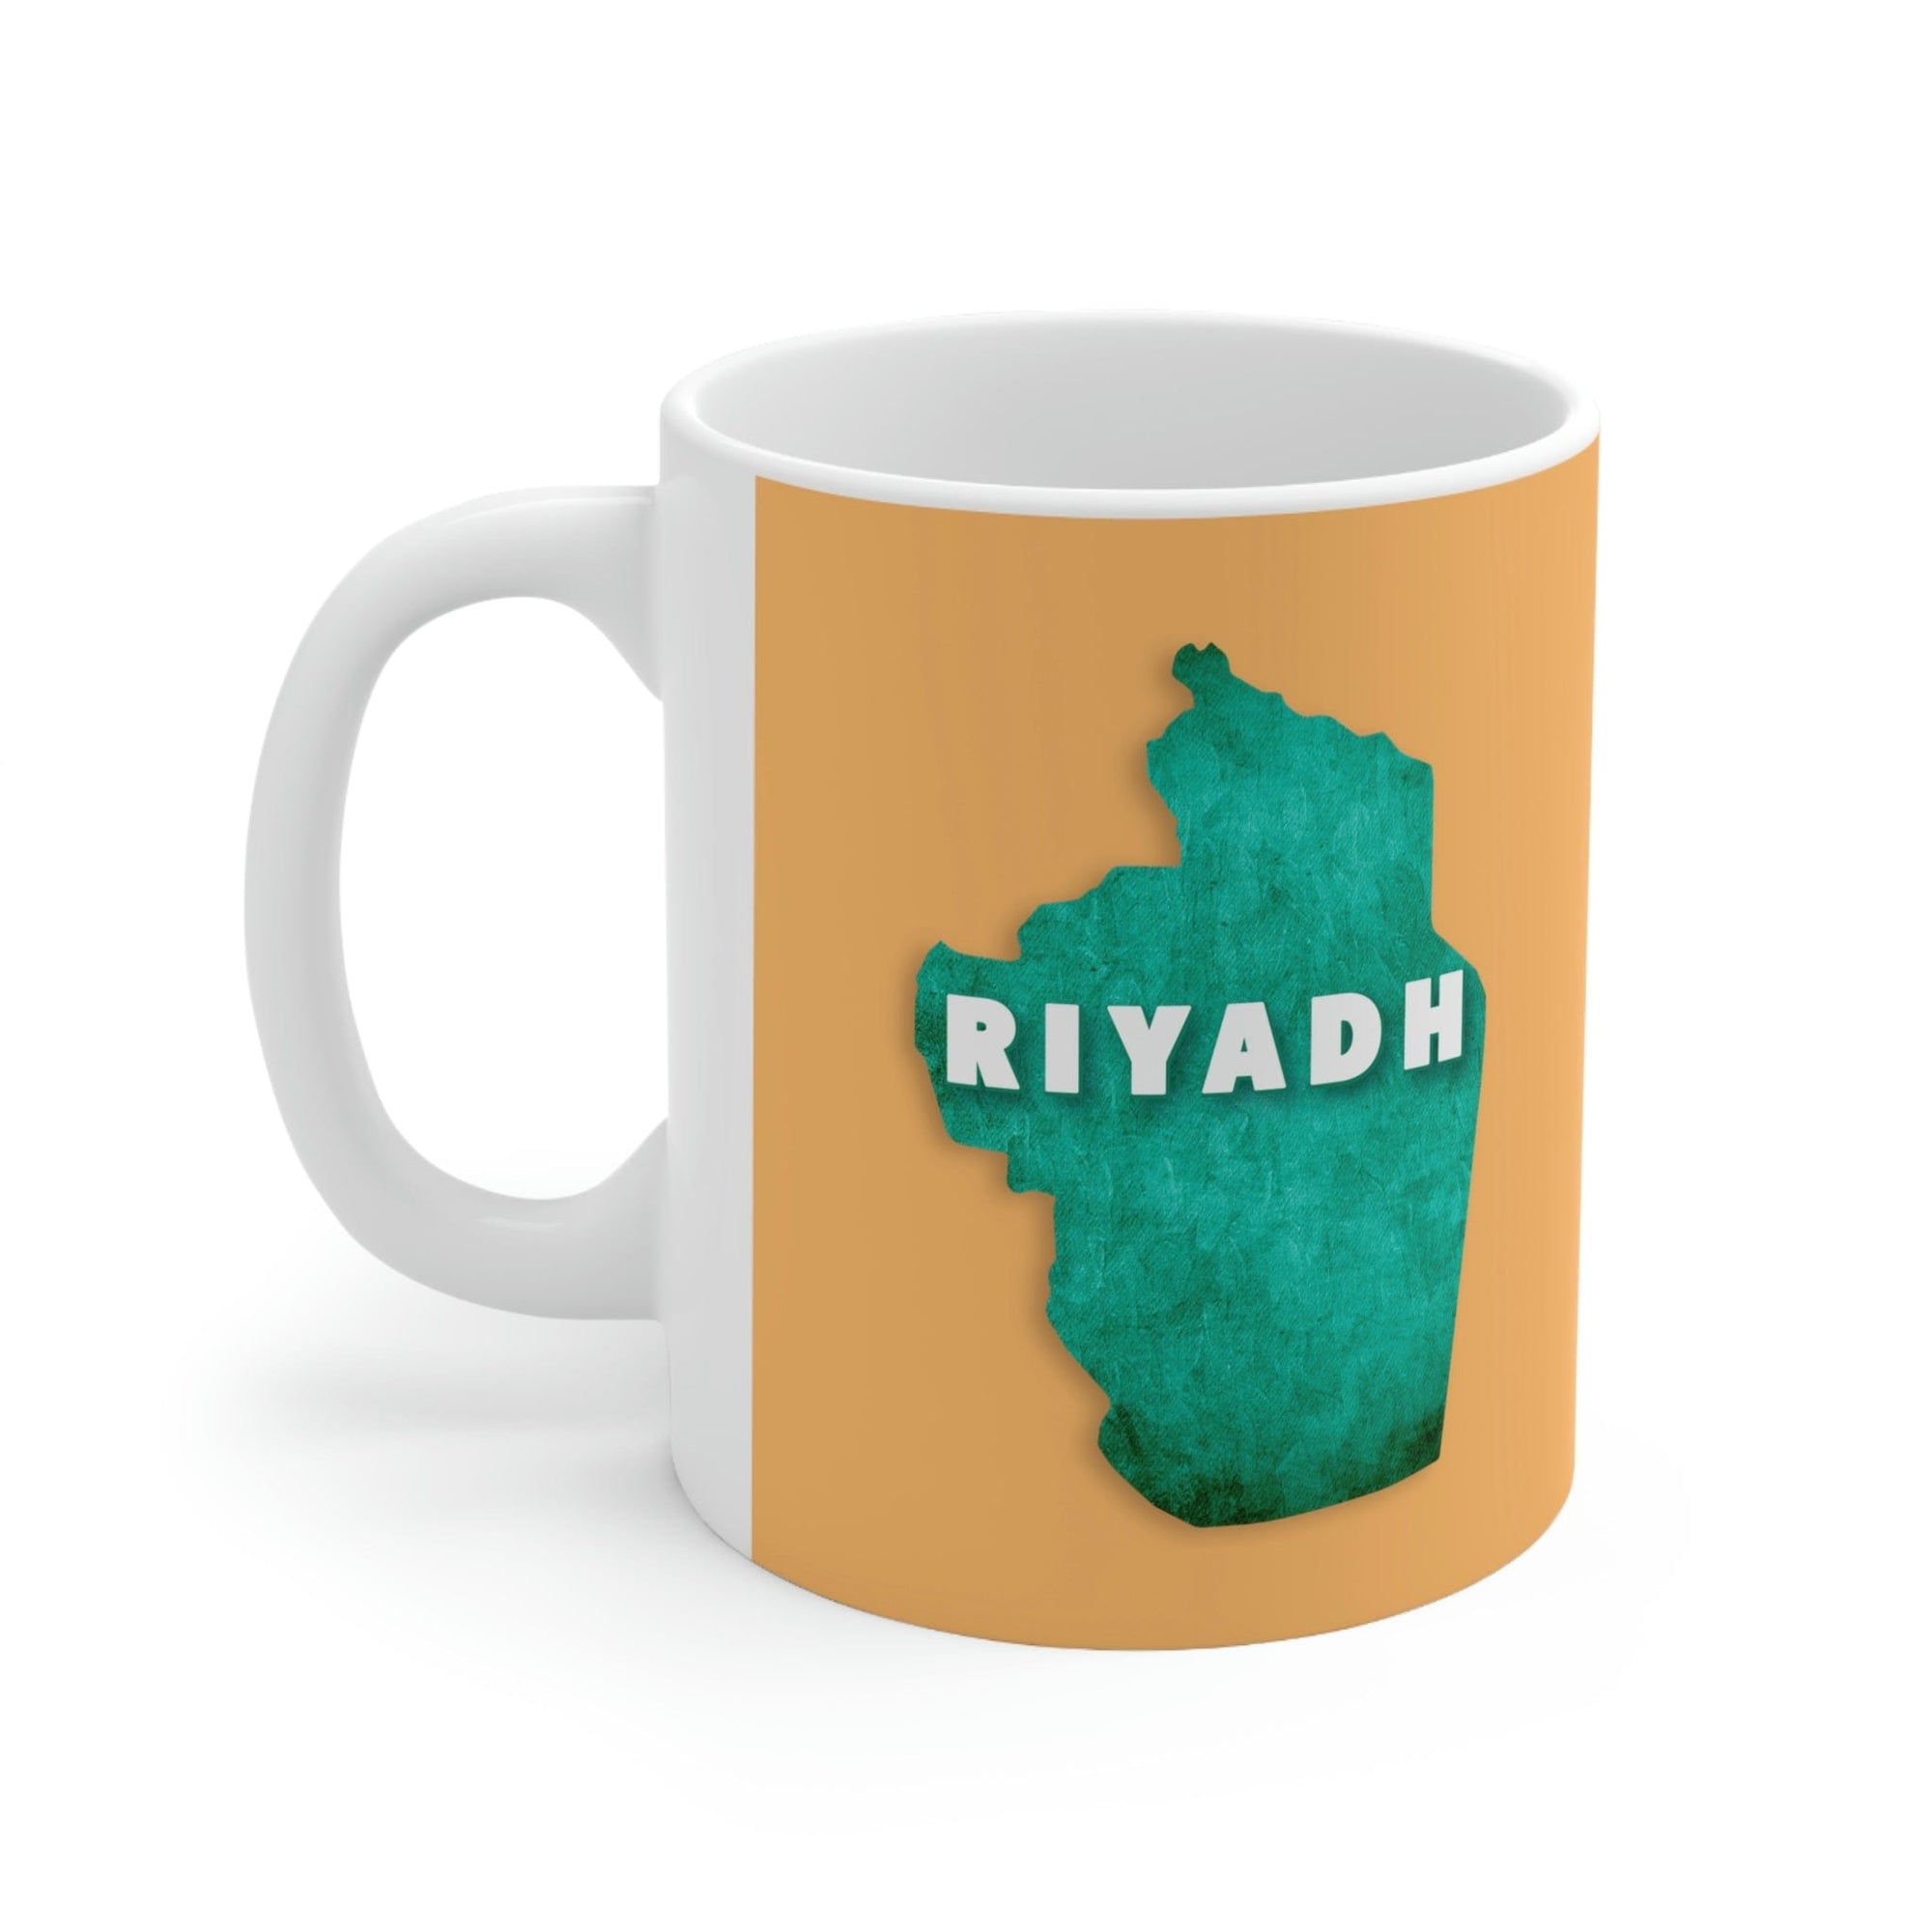 RIYADH - Awesome Ceramic Mug, Exclusive Design